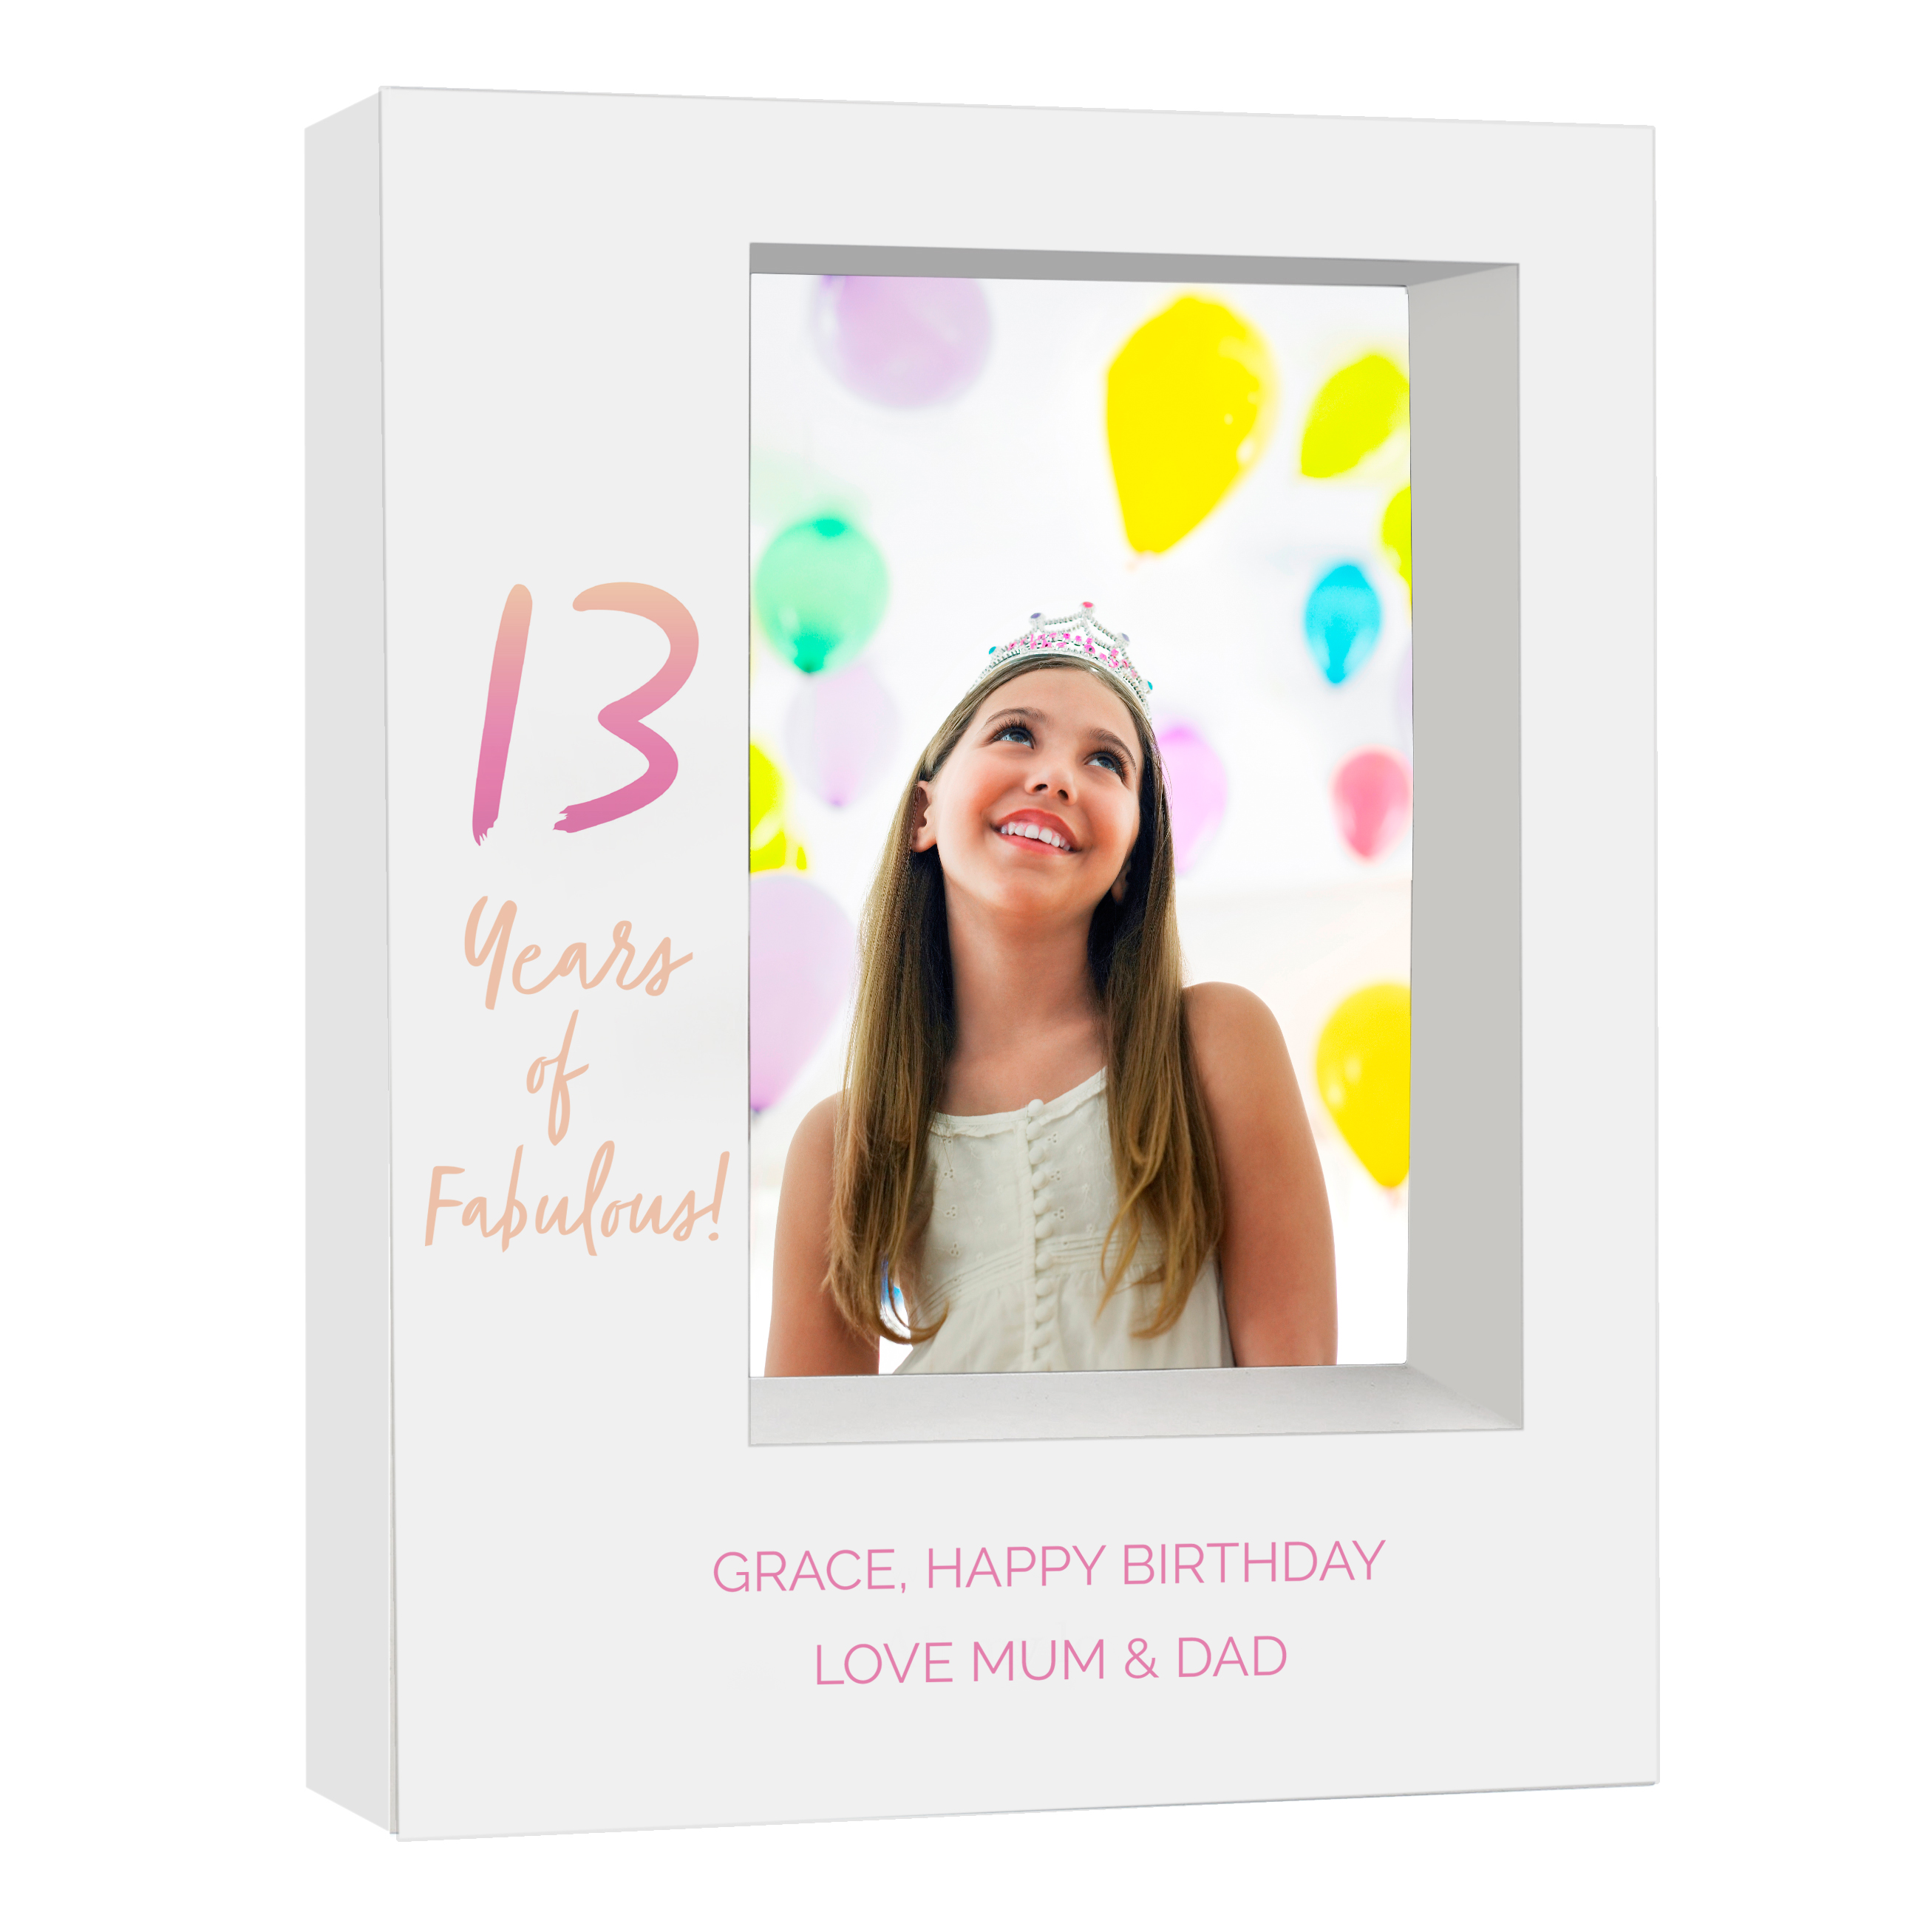 Personalised 13th Birthday Box Photo Frame - Pastel Gradient